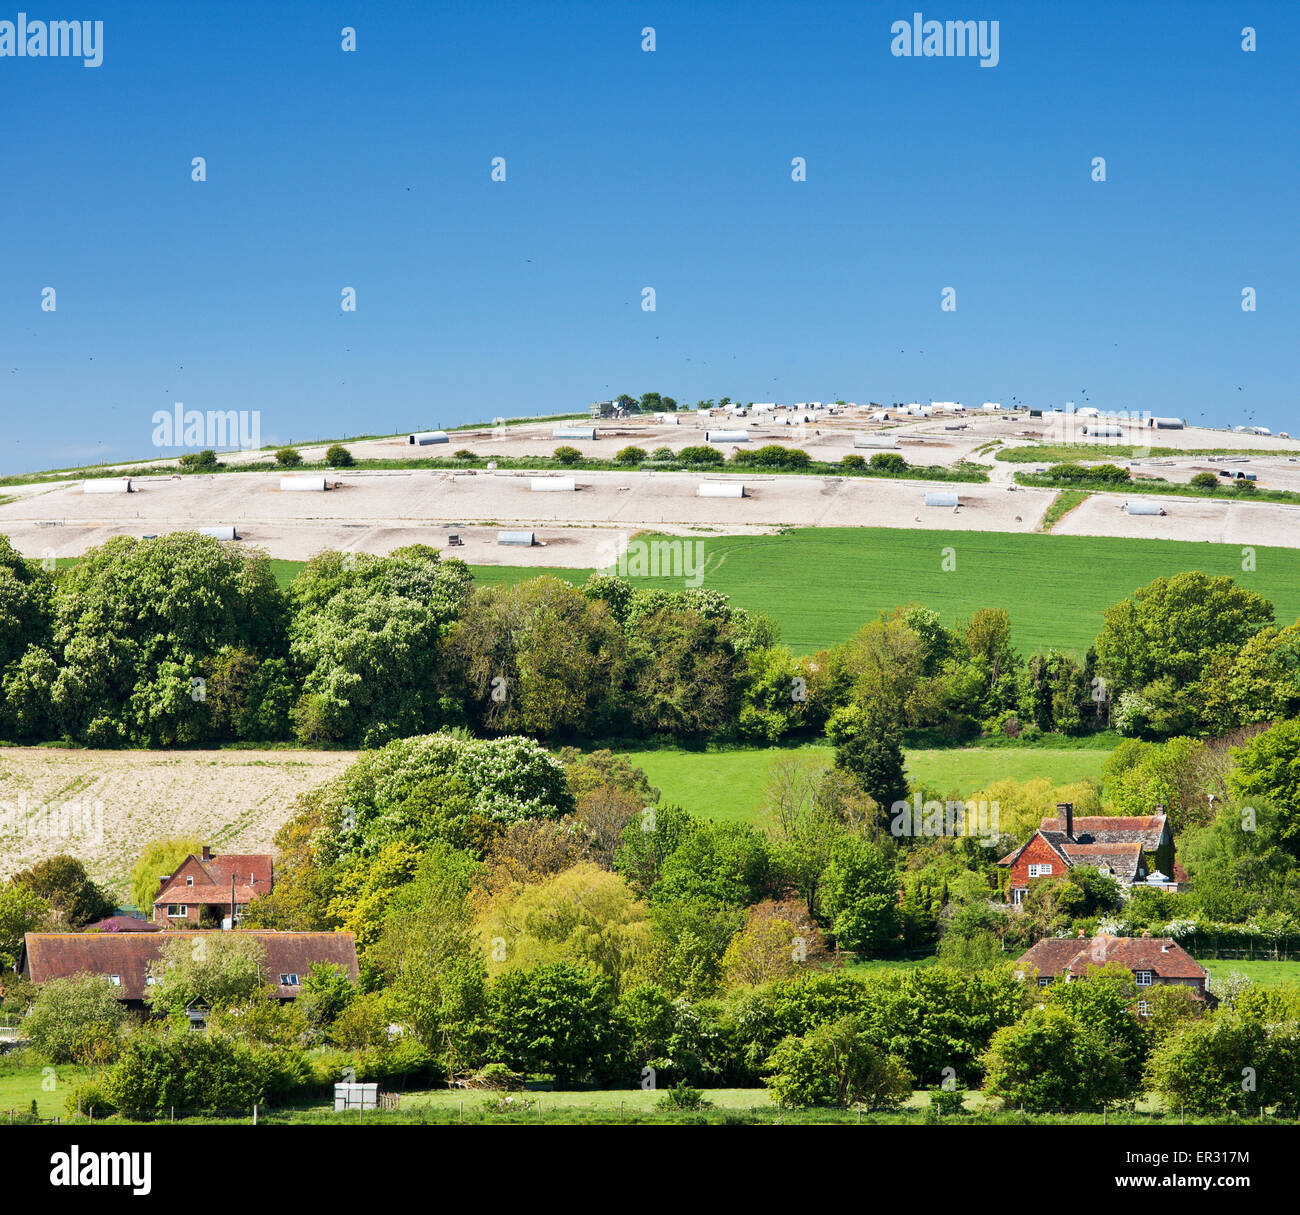 Rotes Tor Schweinefarm, Annington Hill, South Downs Way, Steyning, West Sussex, England, UK. Stockfoto